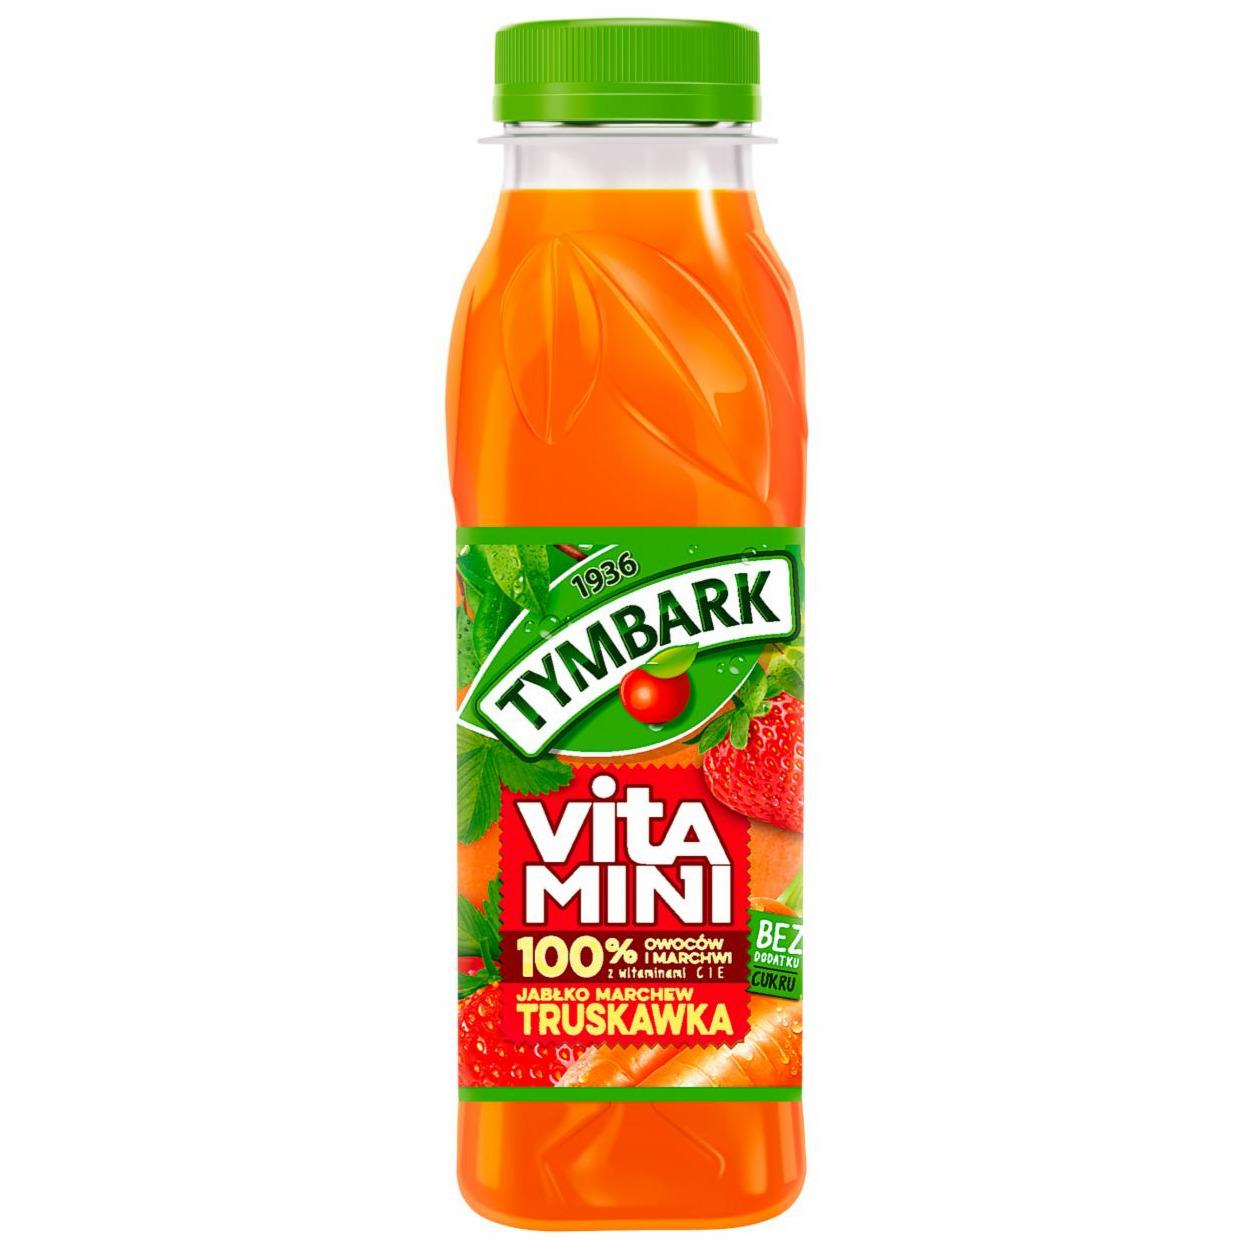 Zdjęcia - Tymbark Vitamini Sok truskawka jabłko marchew 300 ml